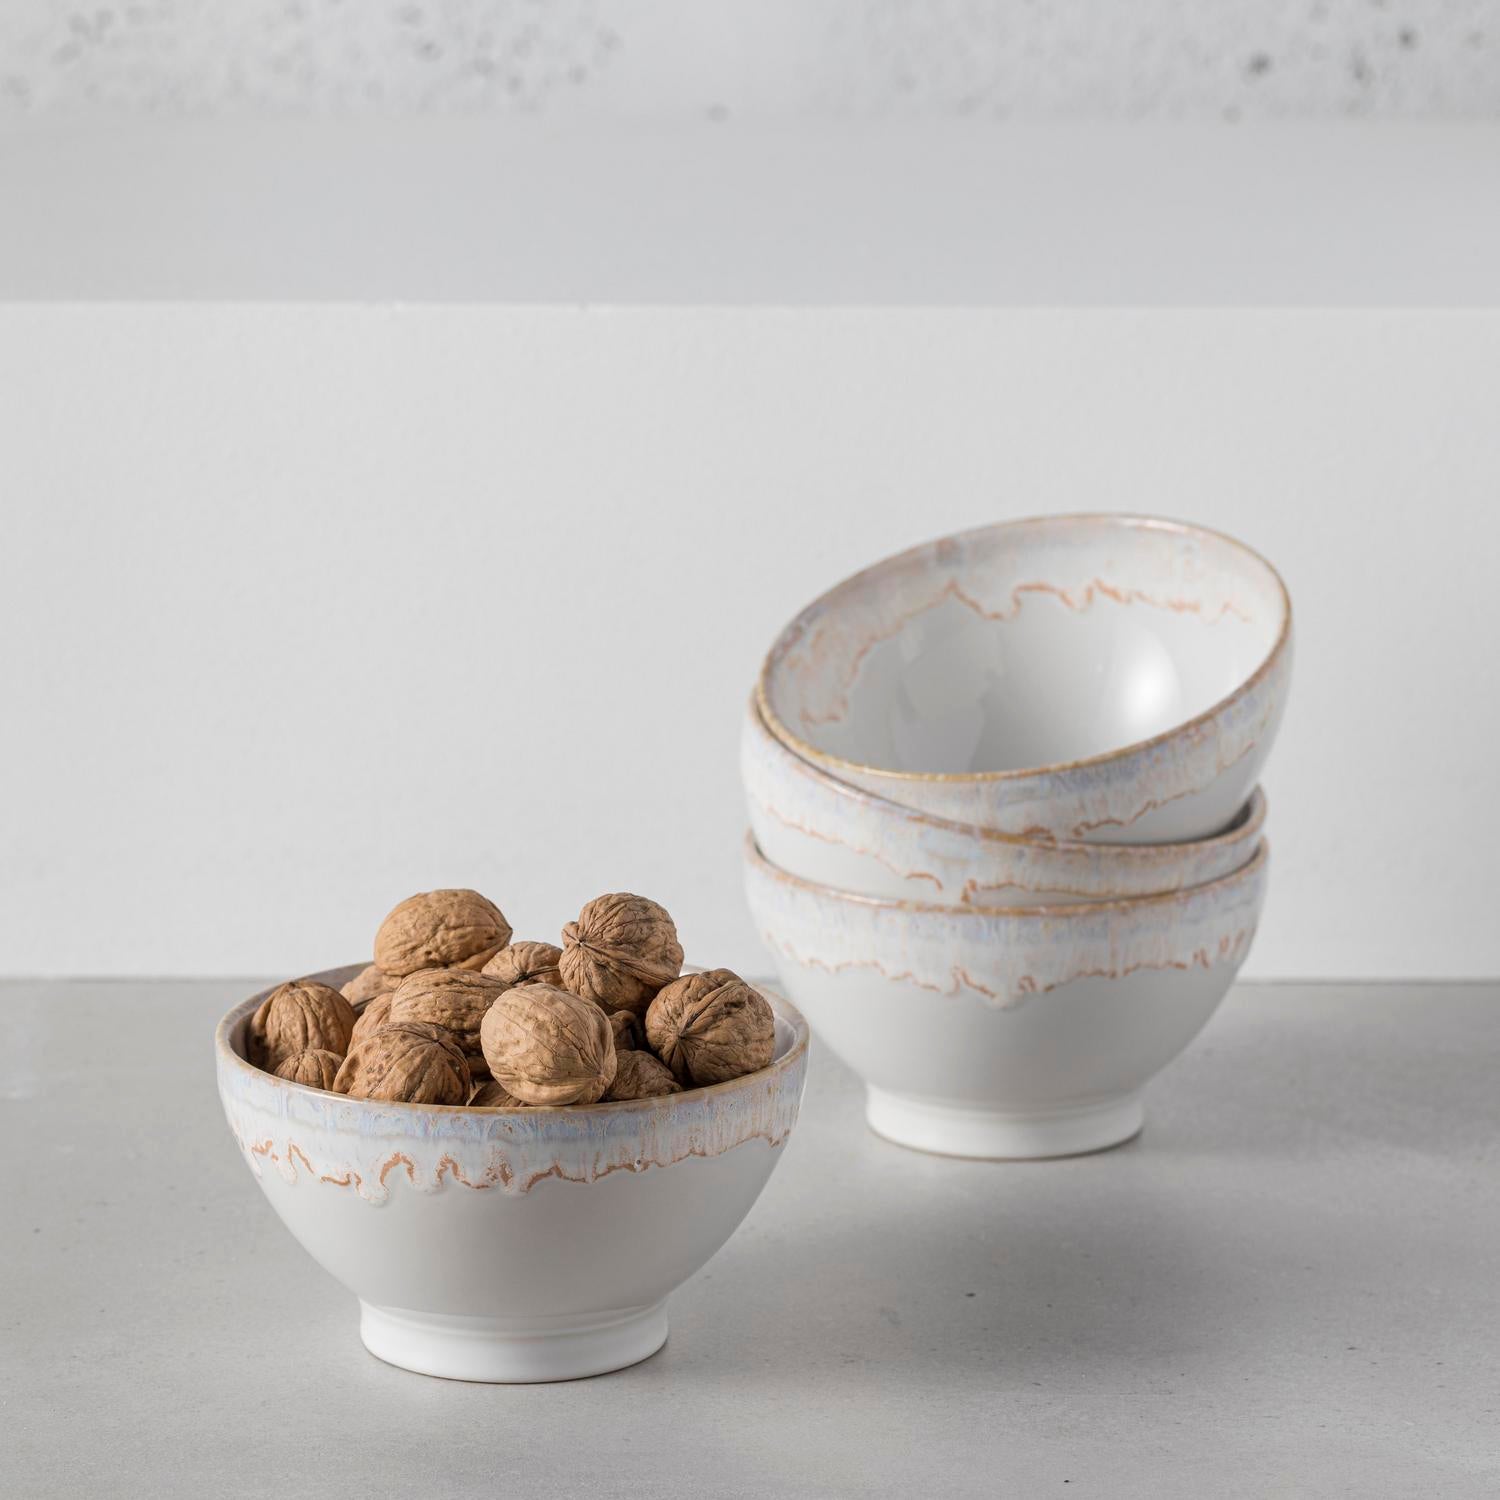 Minimalistic ceramic bowls with walnuts on rustic two-tone backdrop.